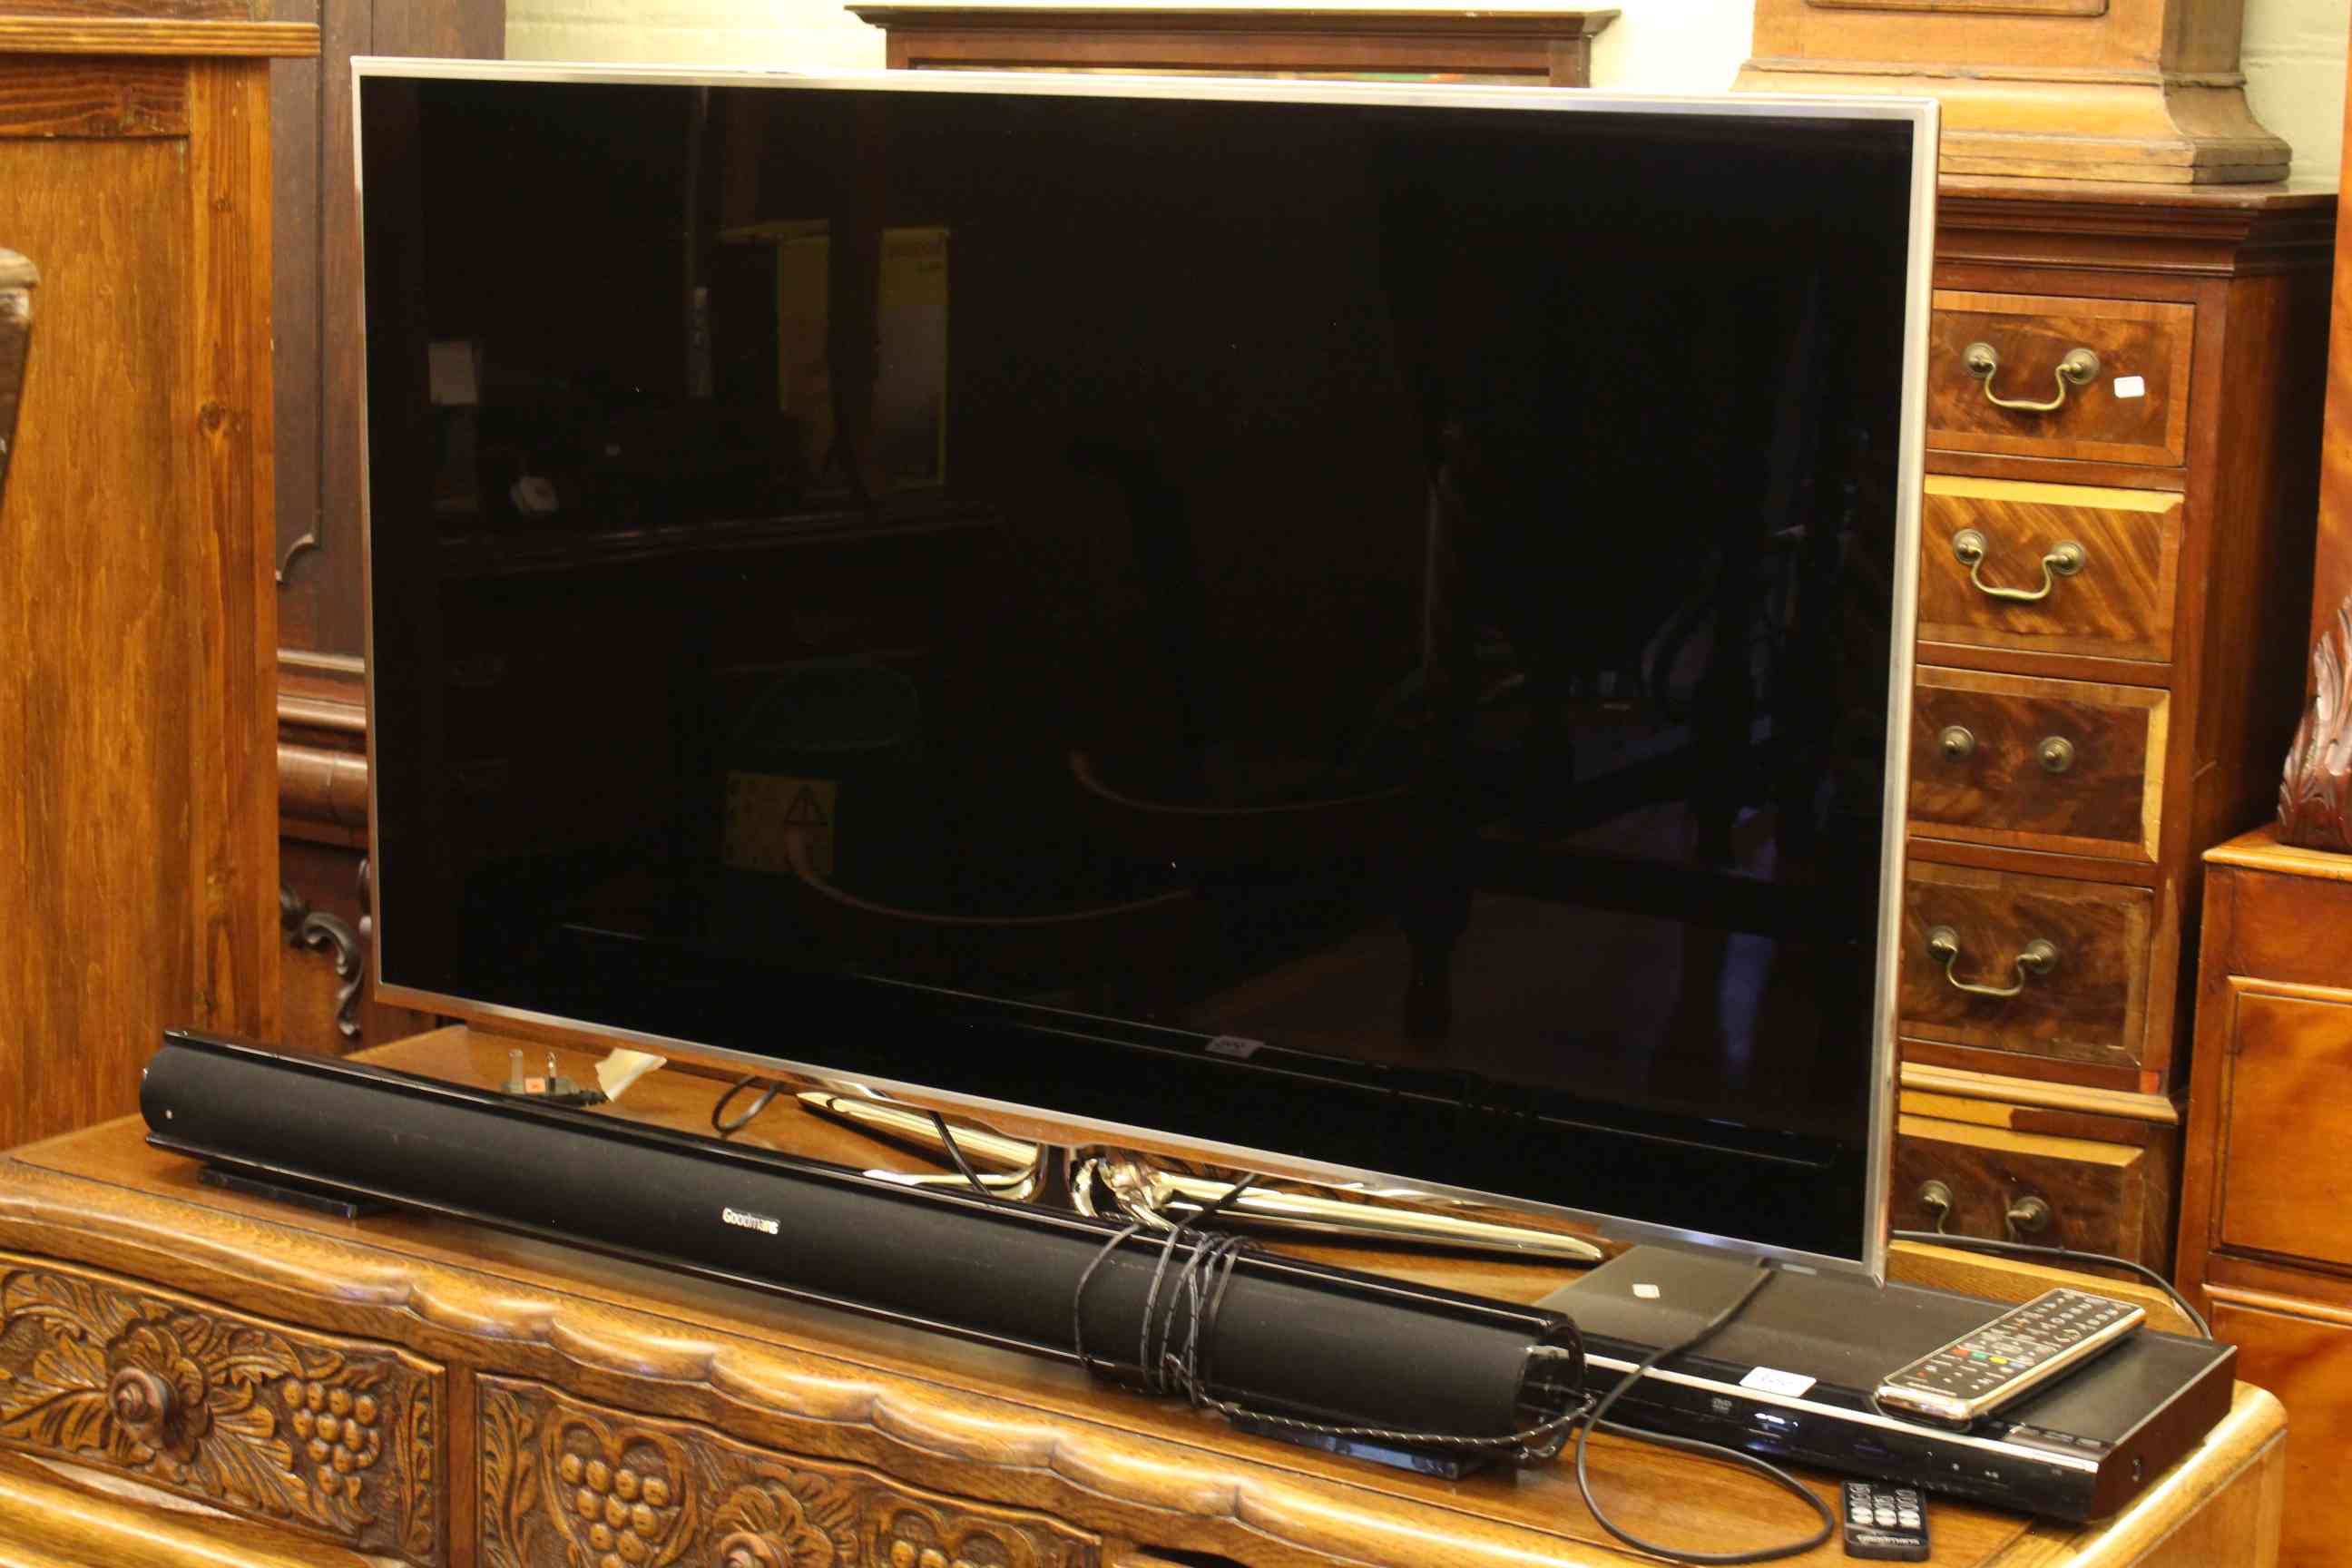 Samsung HDMI television, Toshiba DVD player and Goodmans sound bar (3).